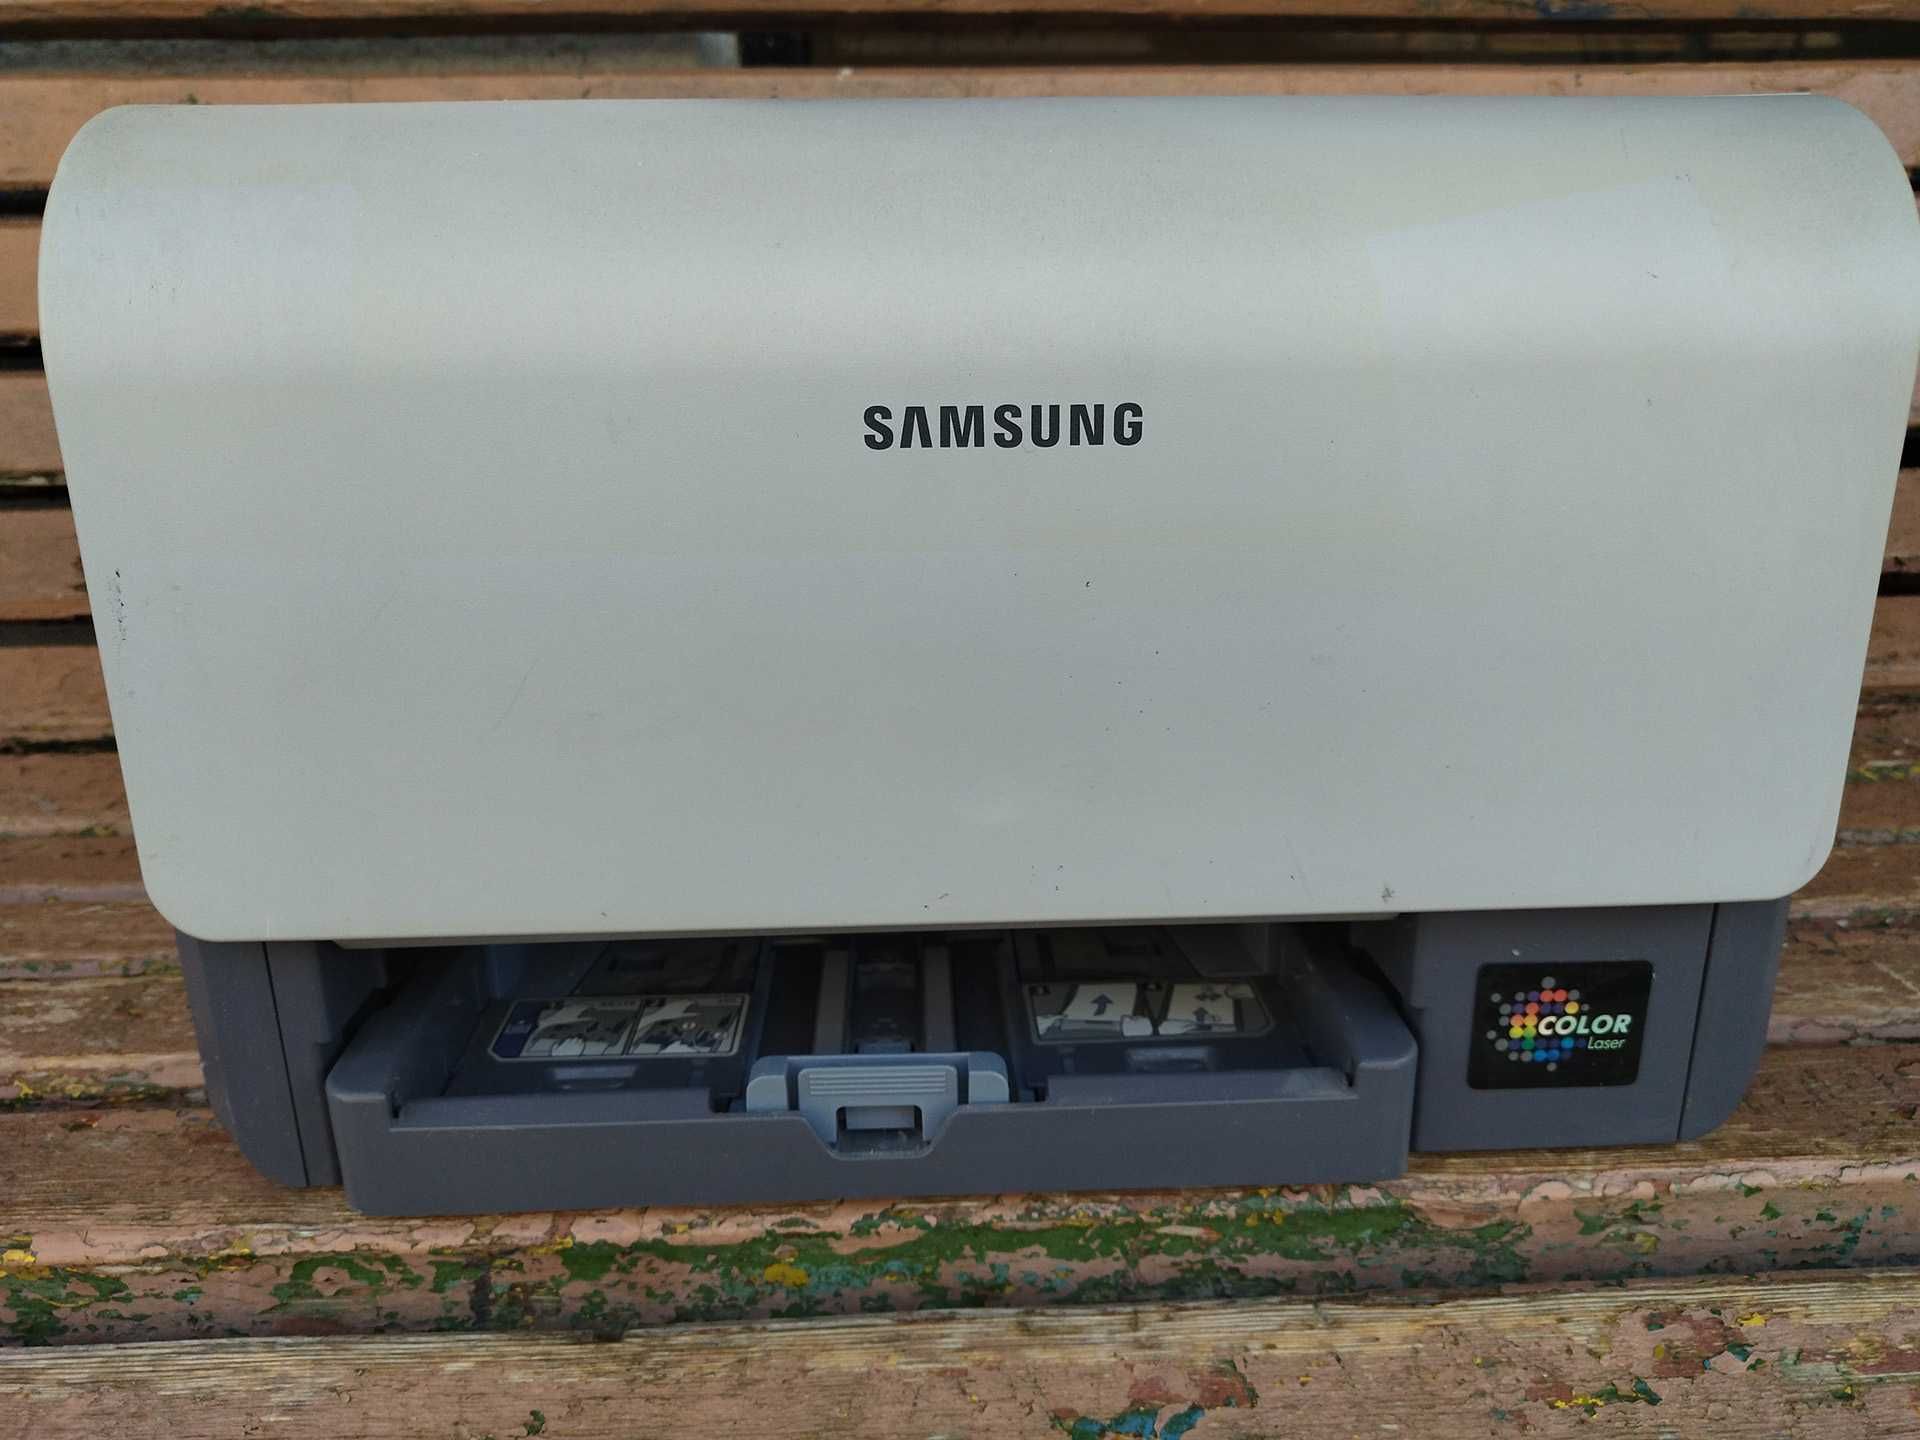 цветен лазерен принтер Samsung CLP-300